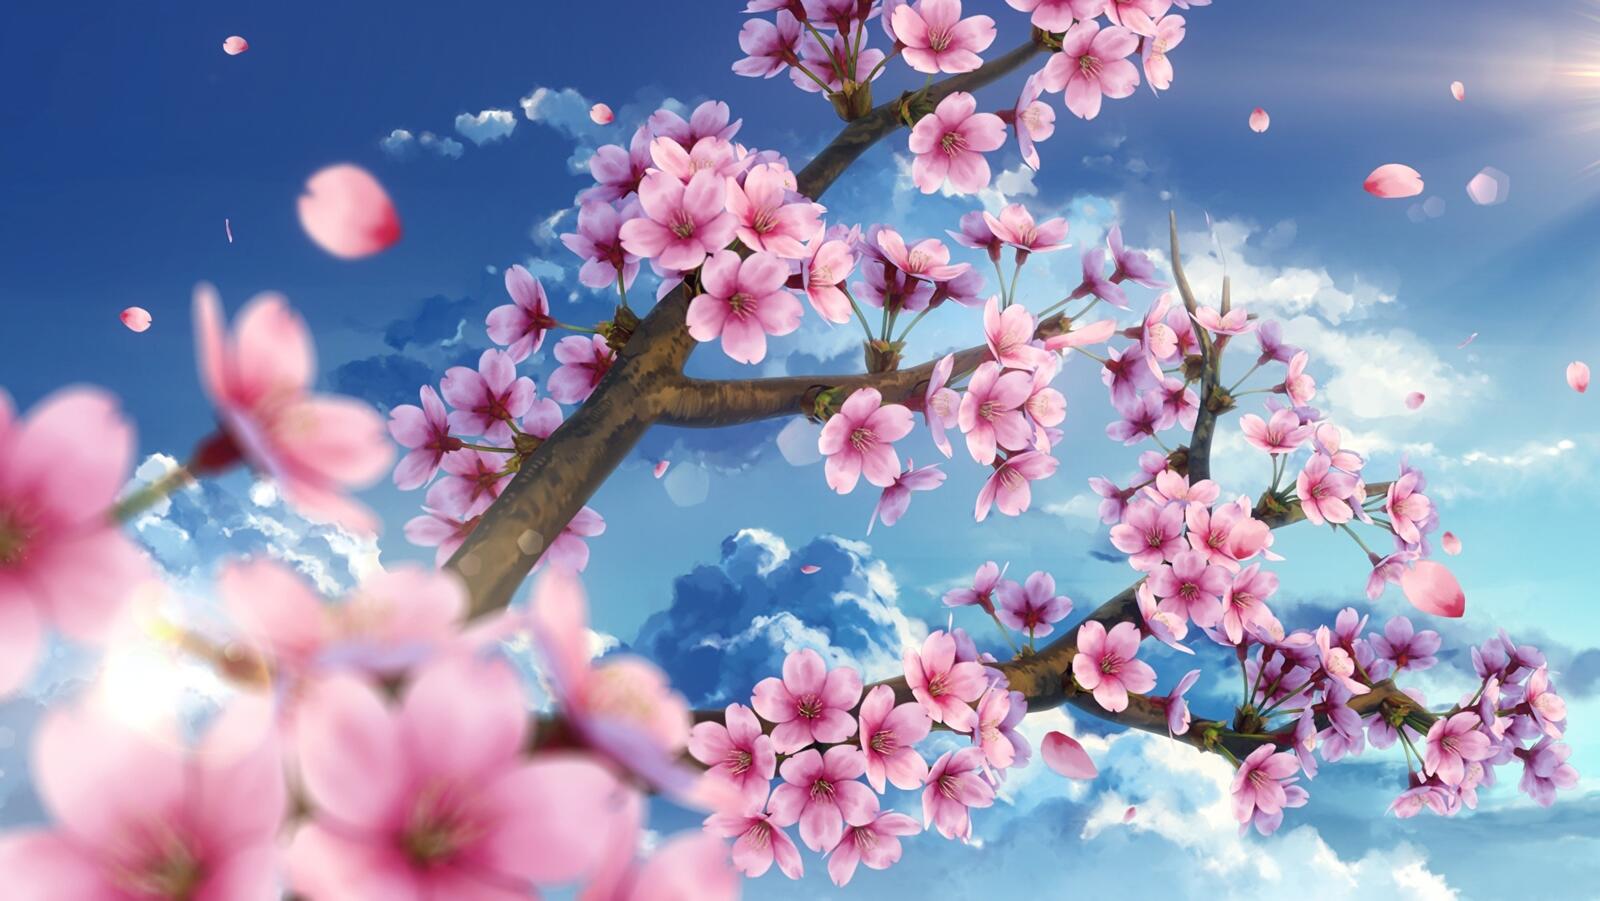 Wallpapers wallpaper cherry blossom picturesque petals on the desktop